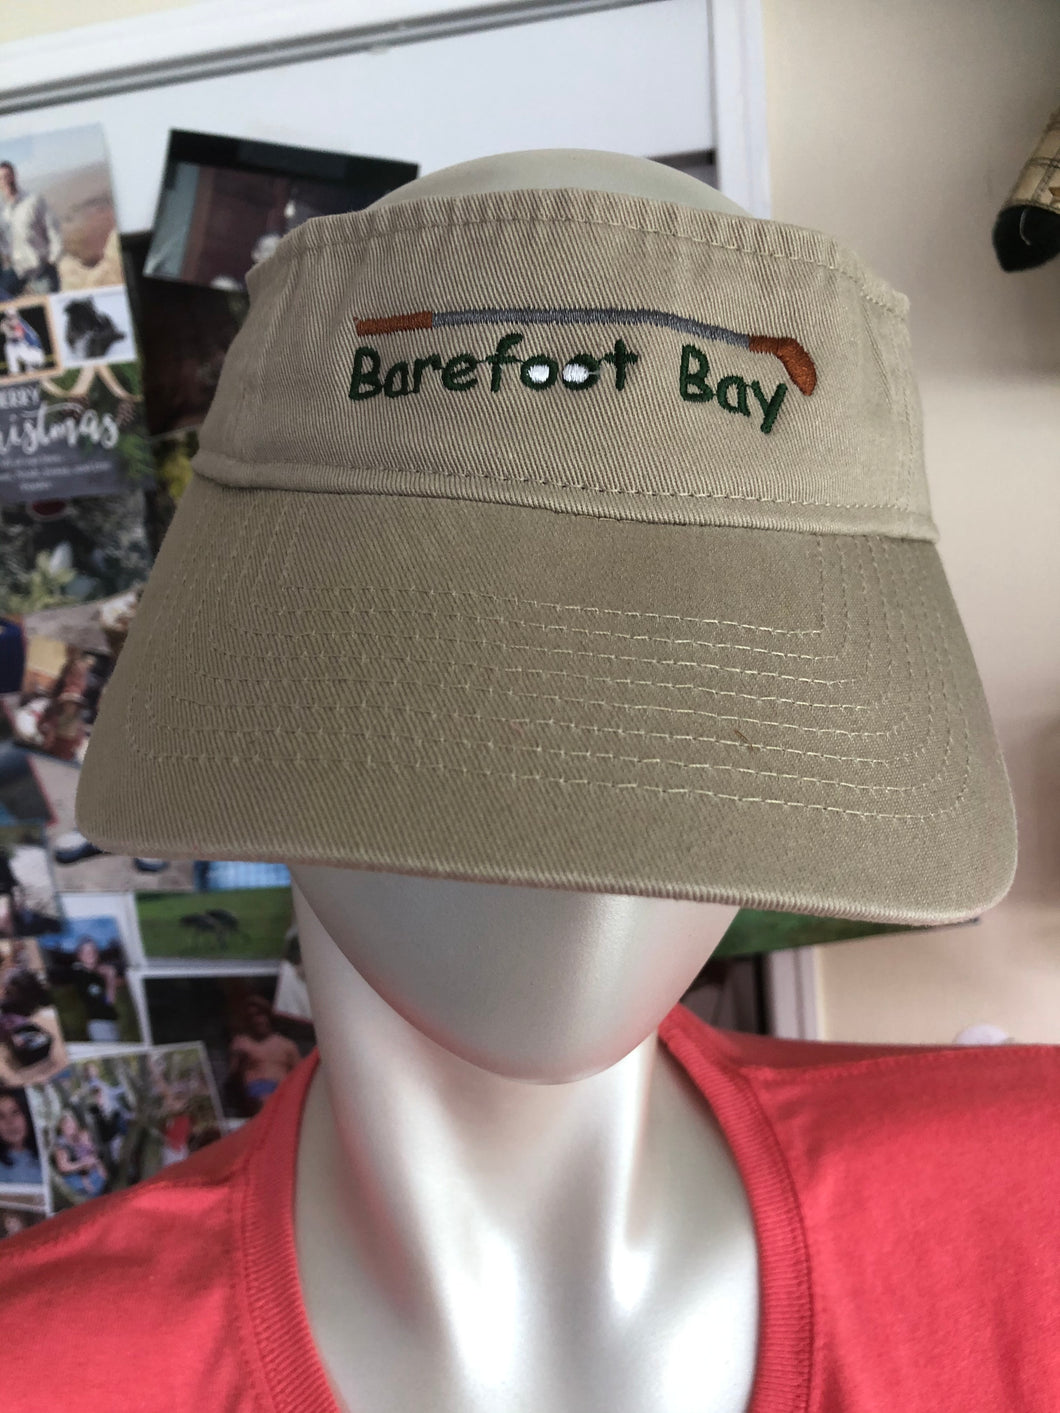 Tan visor with Golf balls and club Barefoot Bay